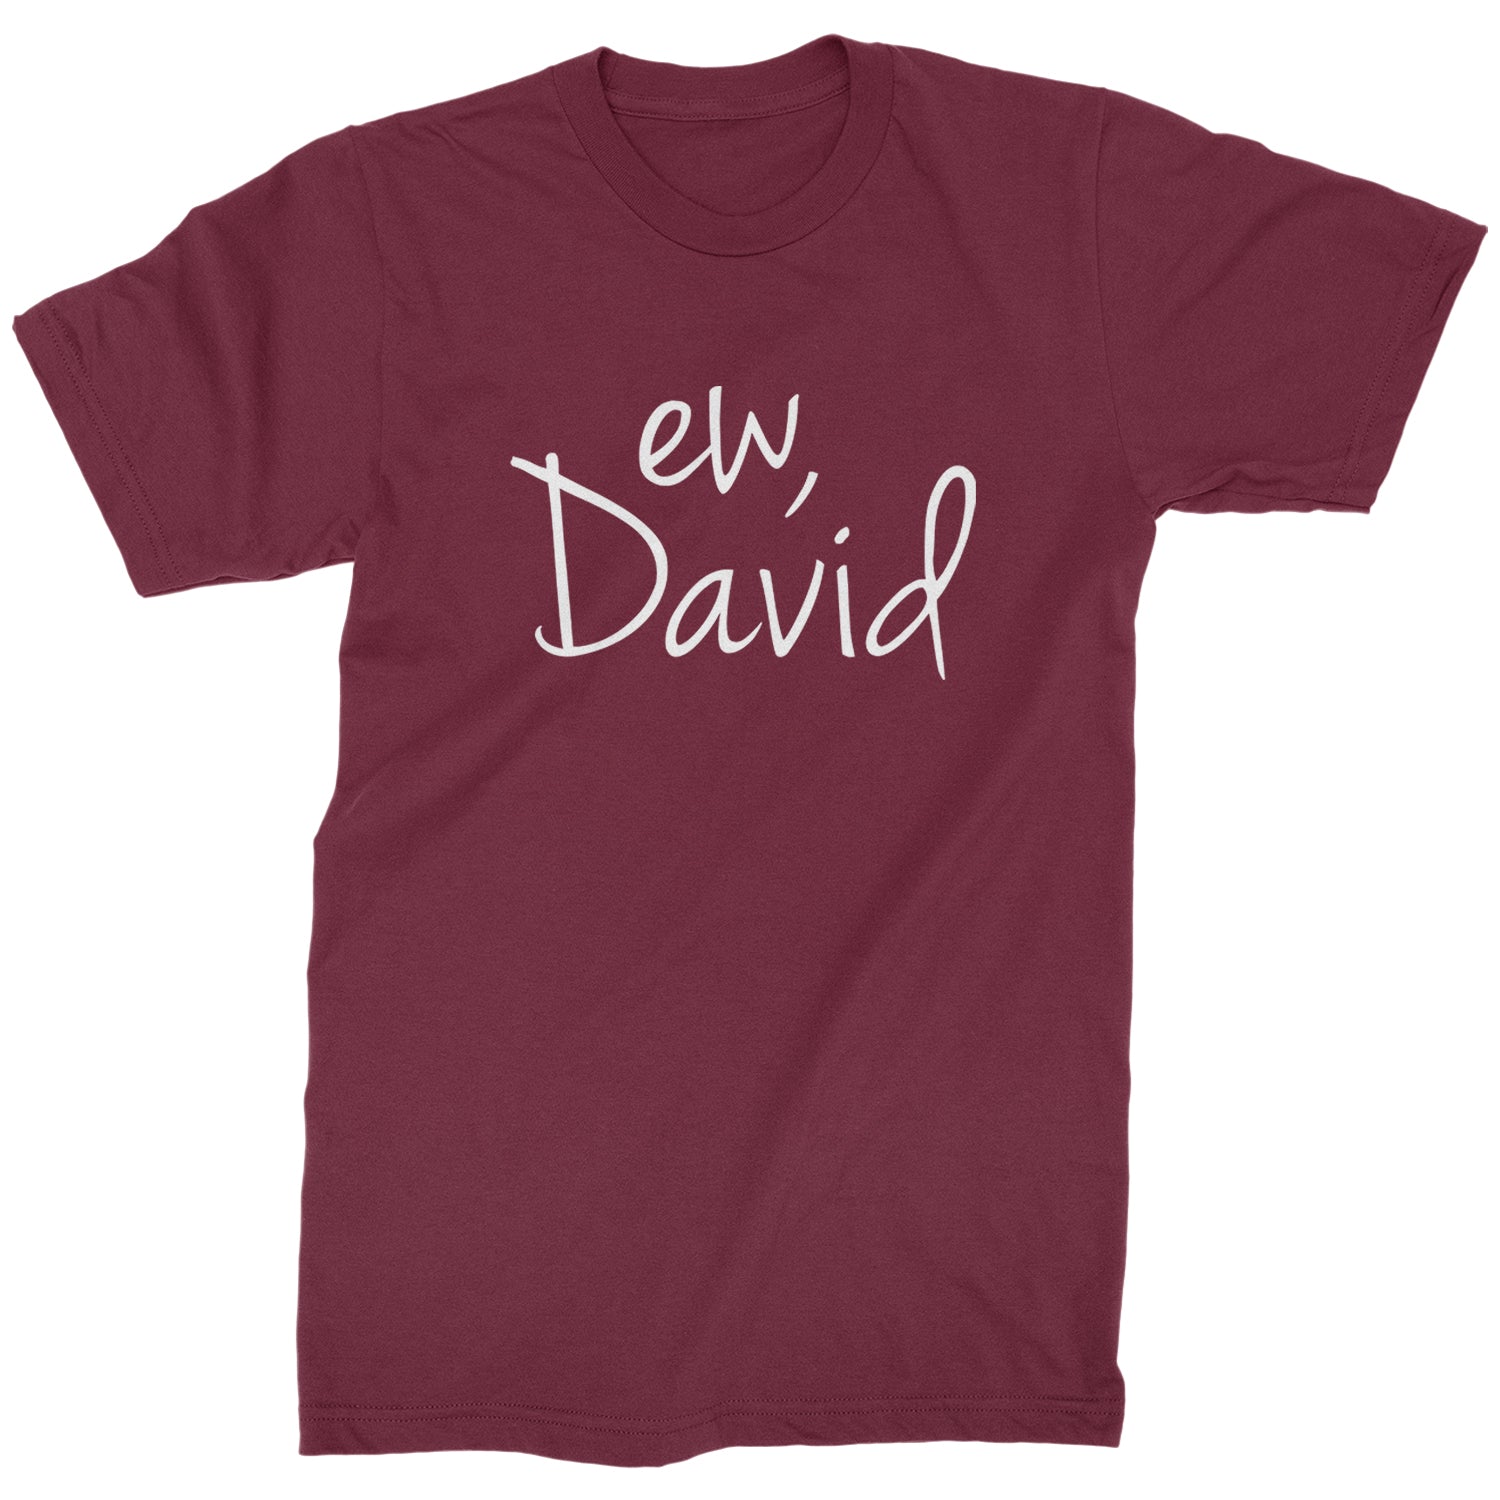 Ew, David Funny Creek TV Show Mens T-shirt alexis, bit, david, eugene, levy, little, nonchalance, schitt by Expression Tees